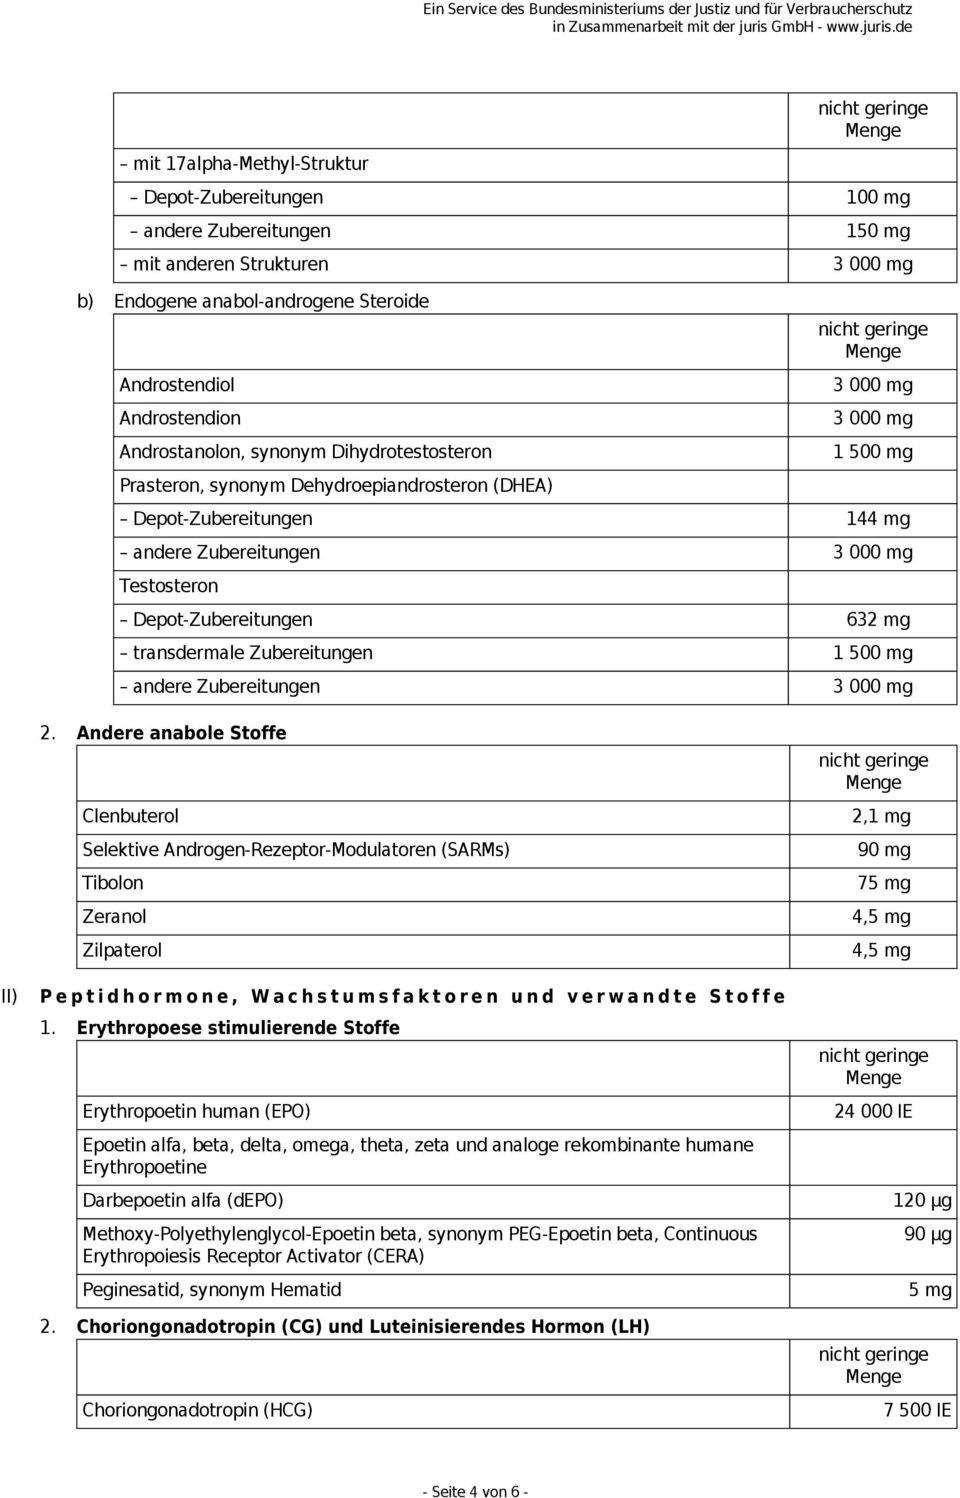 Andere anabole Stoffe Clenbuterol 2,1 mg Selektive Androgen-Rezeptor-Modulatoren (SARMs) 90 mg Tibolon 75 mg Zeranol 4,5 mg Zilpaterol 4,5 mg II) Peptidhormone, Wachstumsfaktoren und verwandte Stoffe